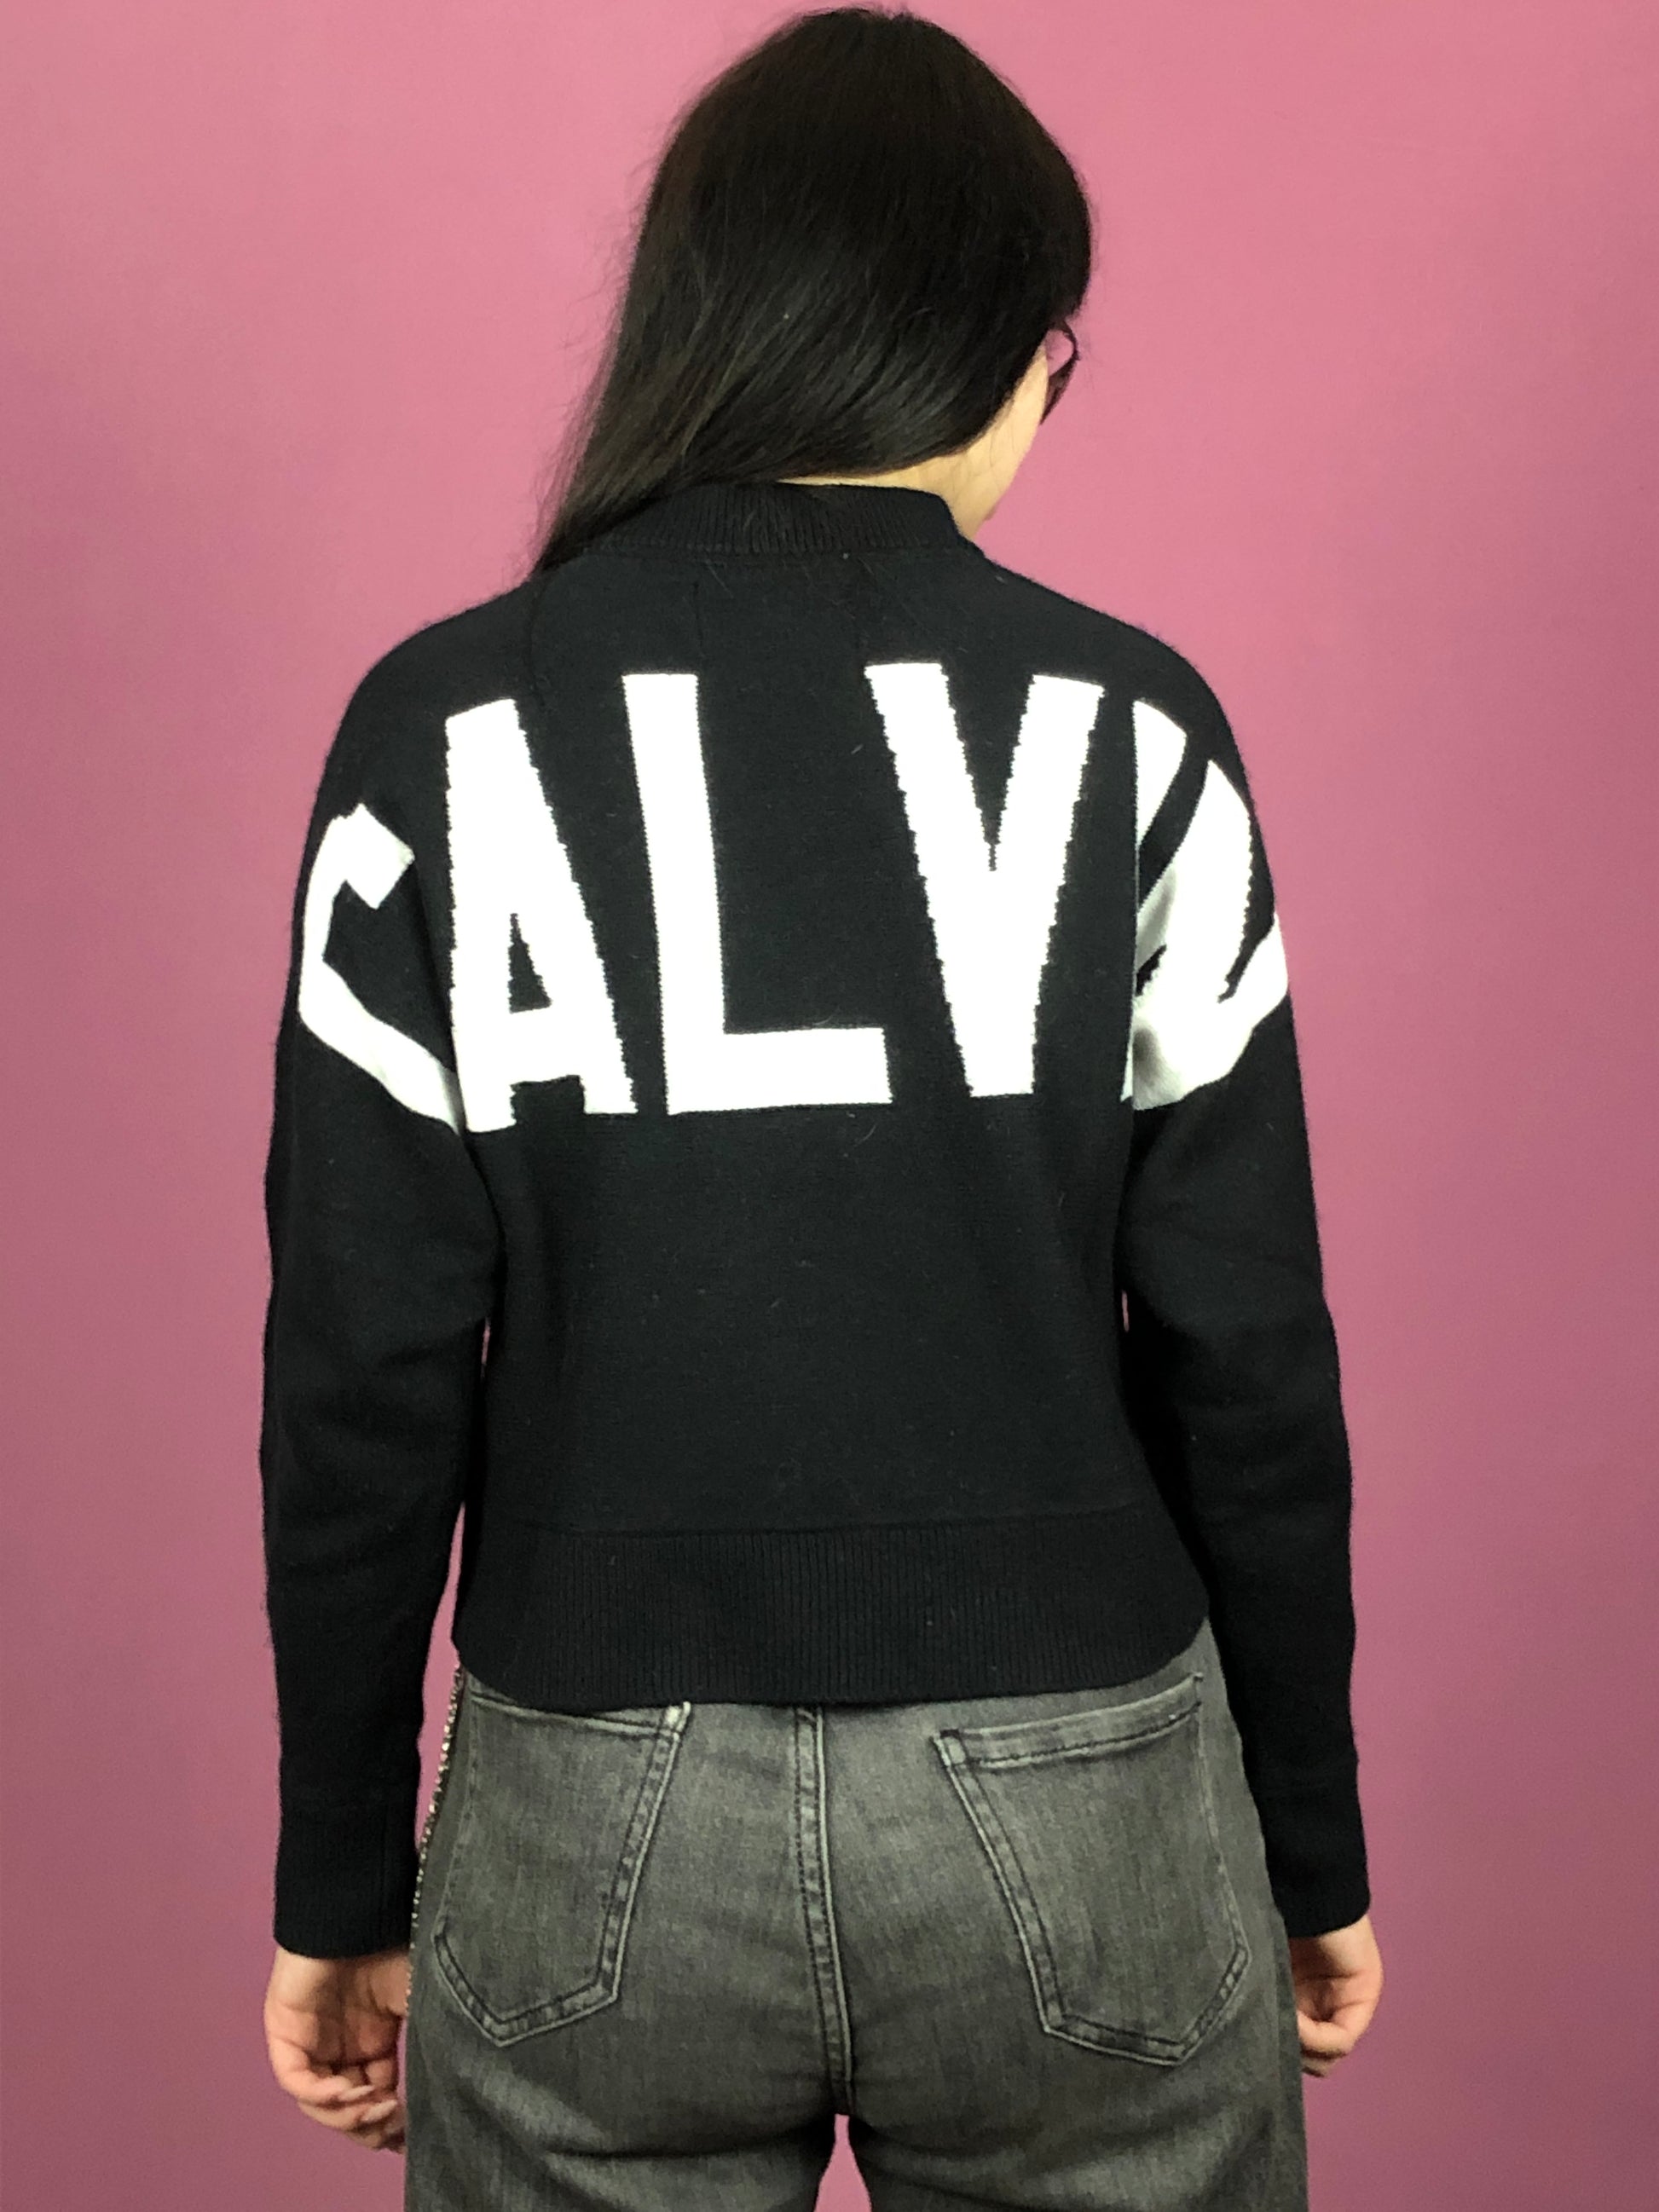 Calvin Klein Jeans Big Logo Vintage Women's Sweater - XS Black Wool Blend